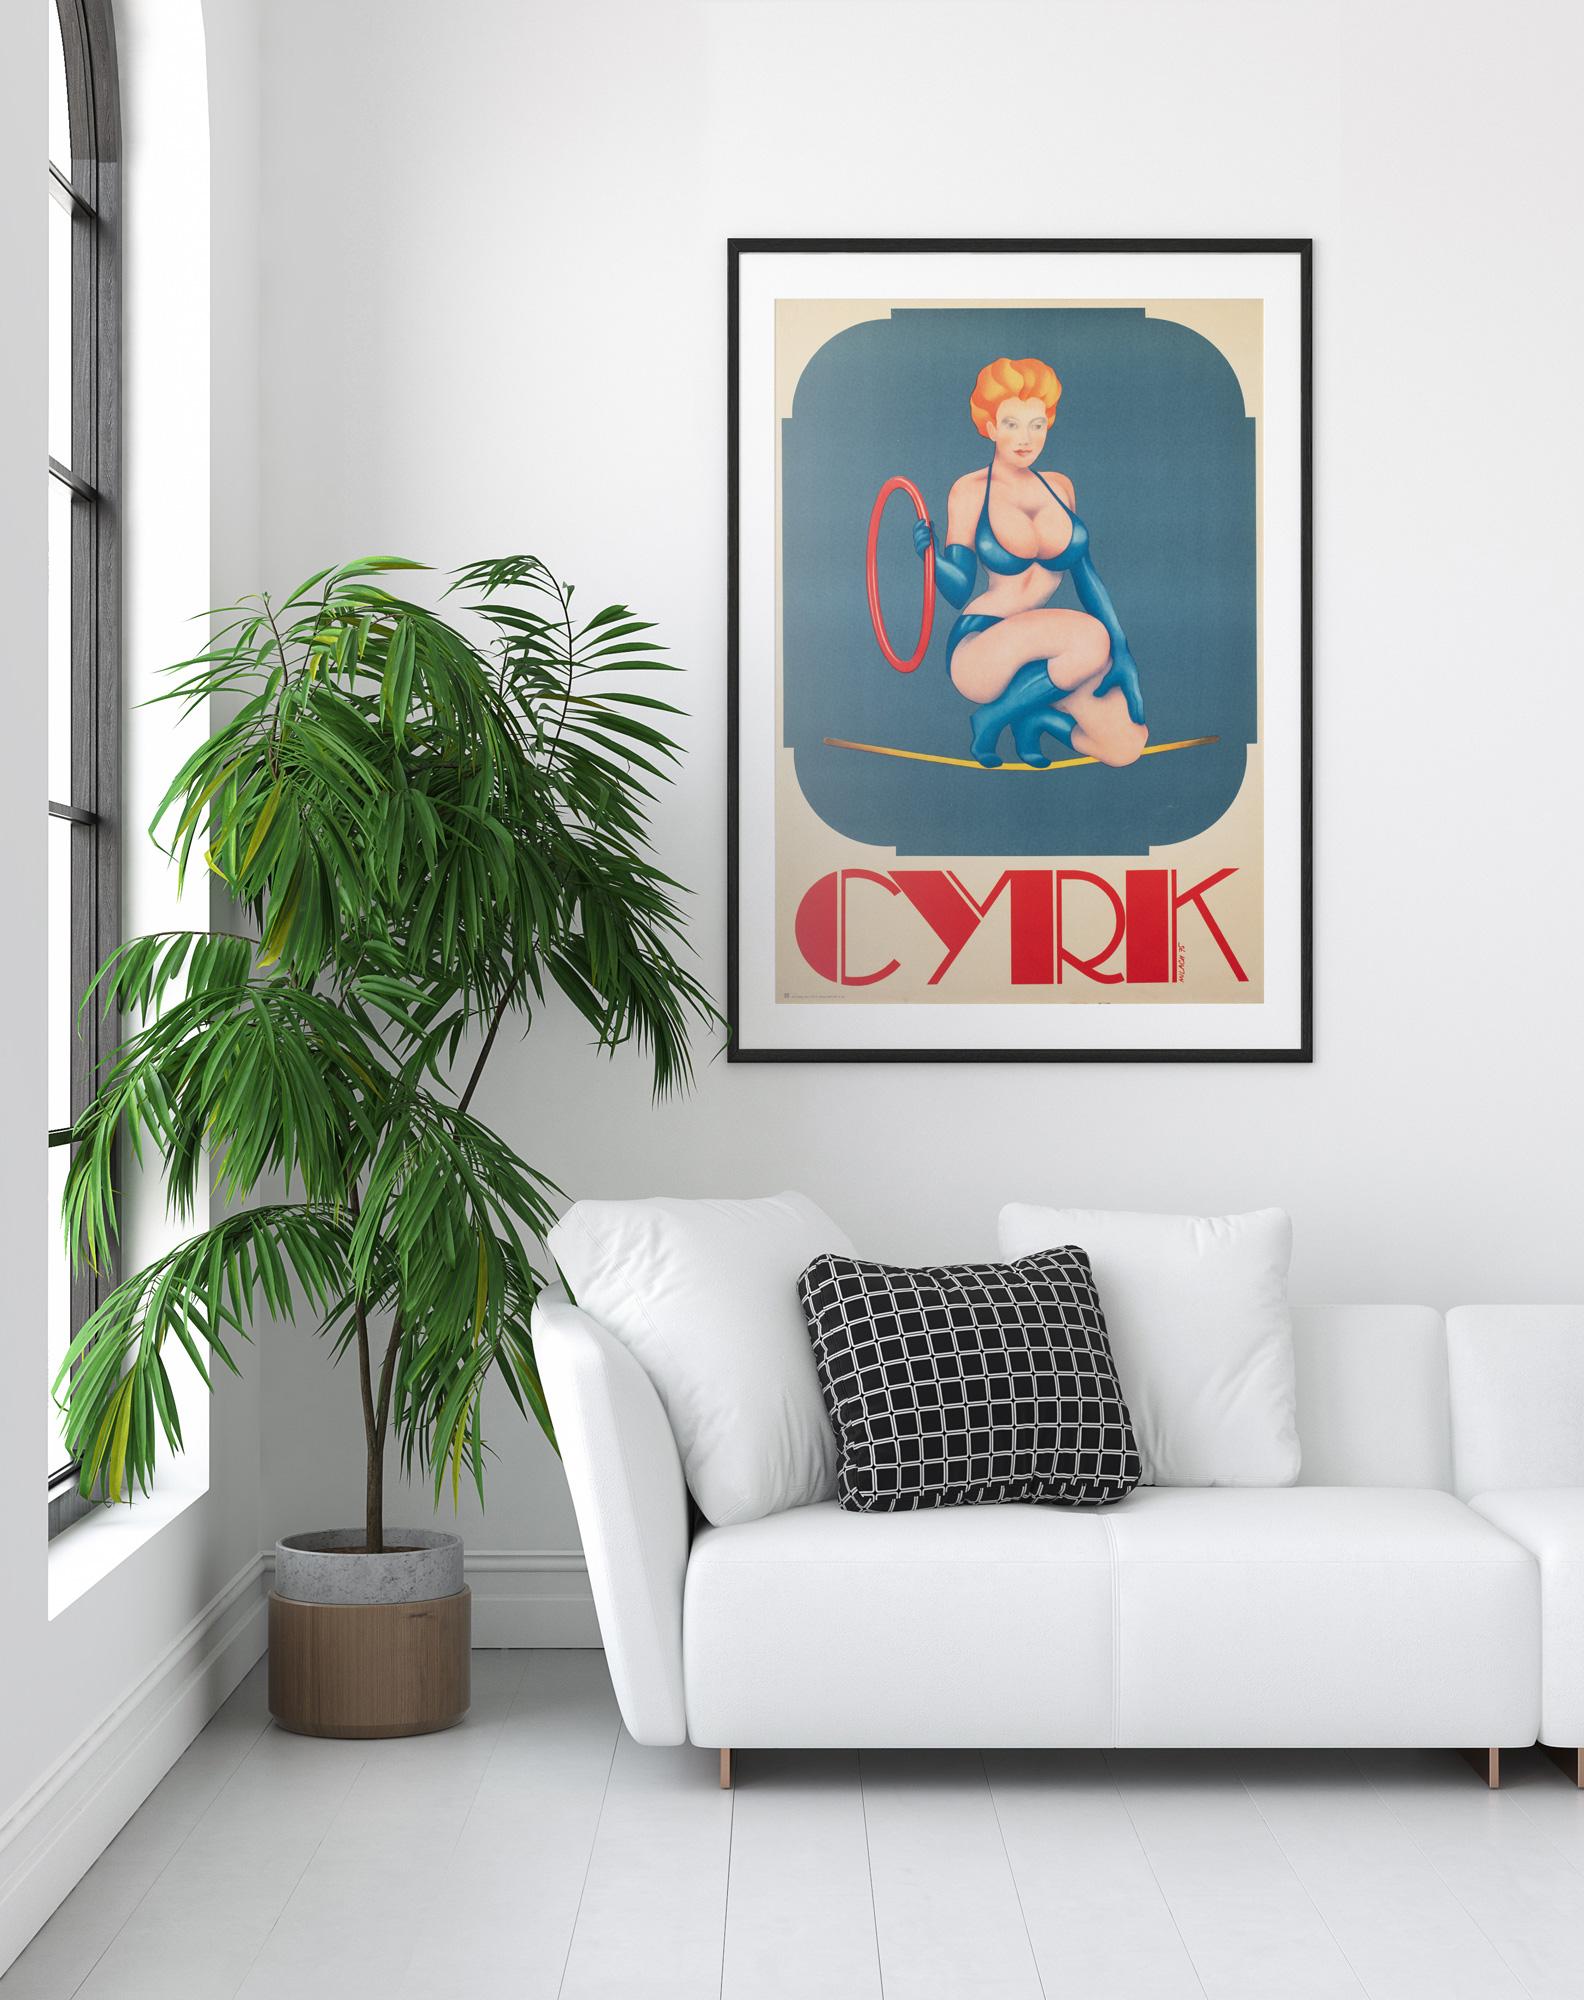 Cyrk Bikini Aerialist 1975 Polish Circus Poster, Milach For Sale 3